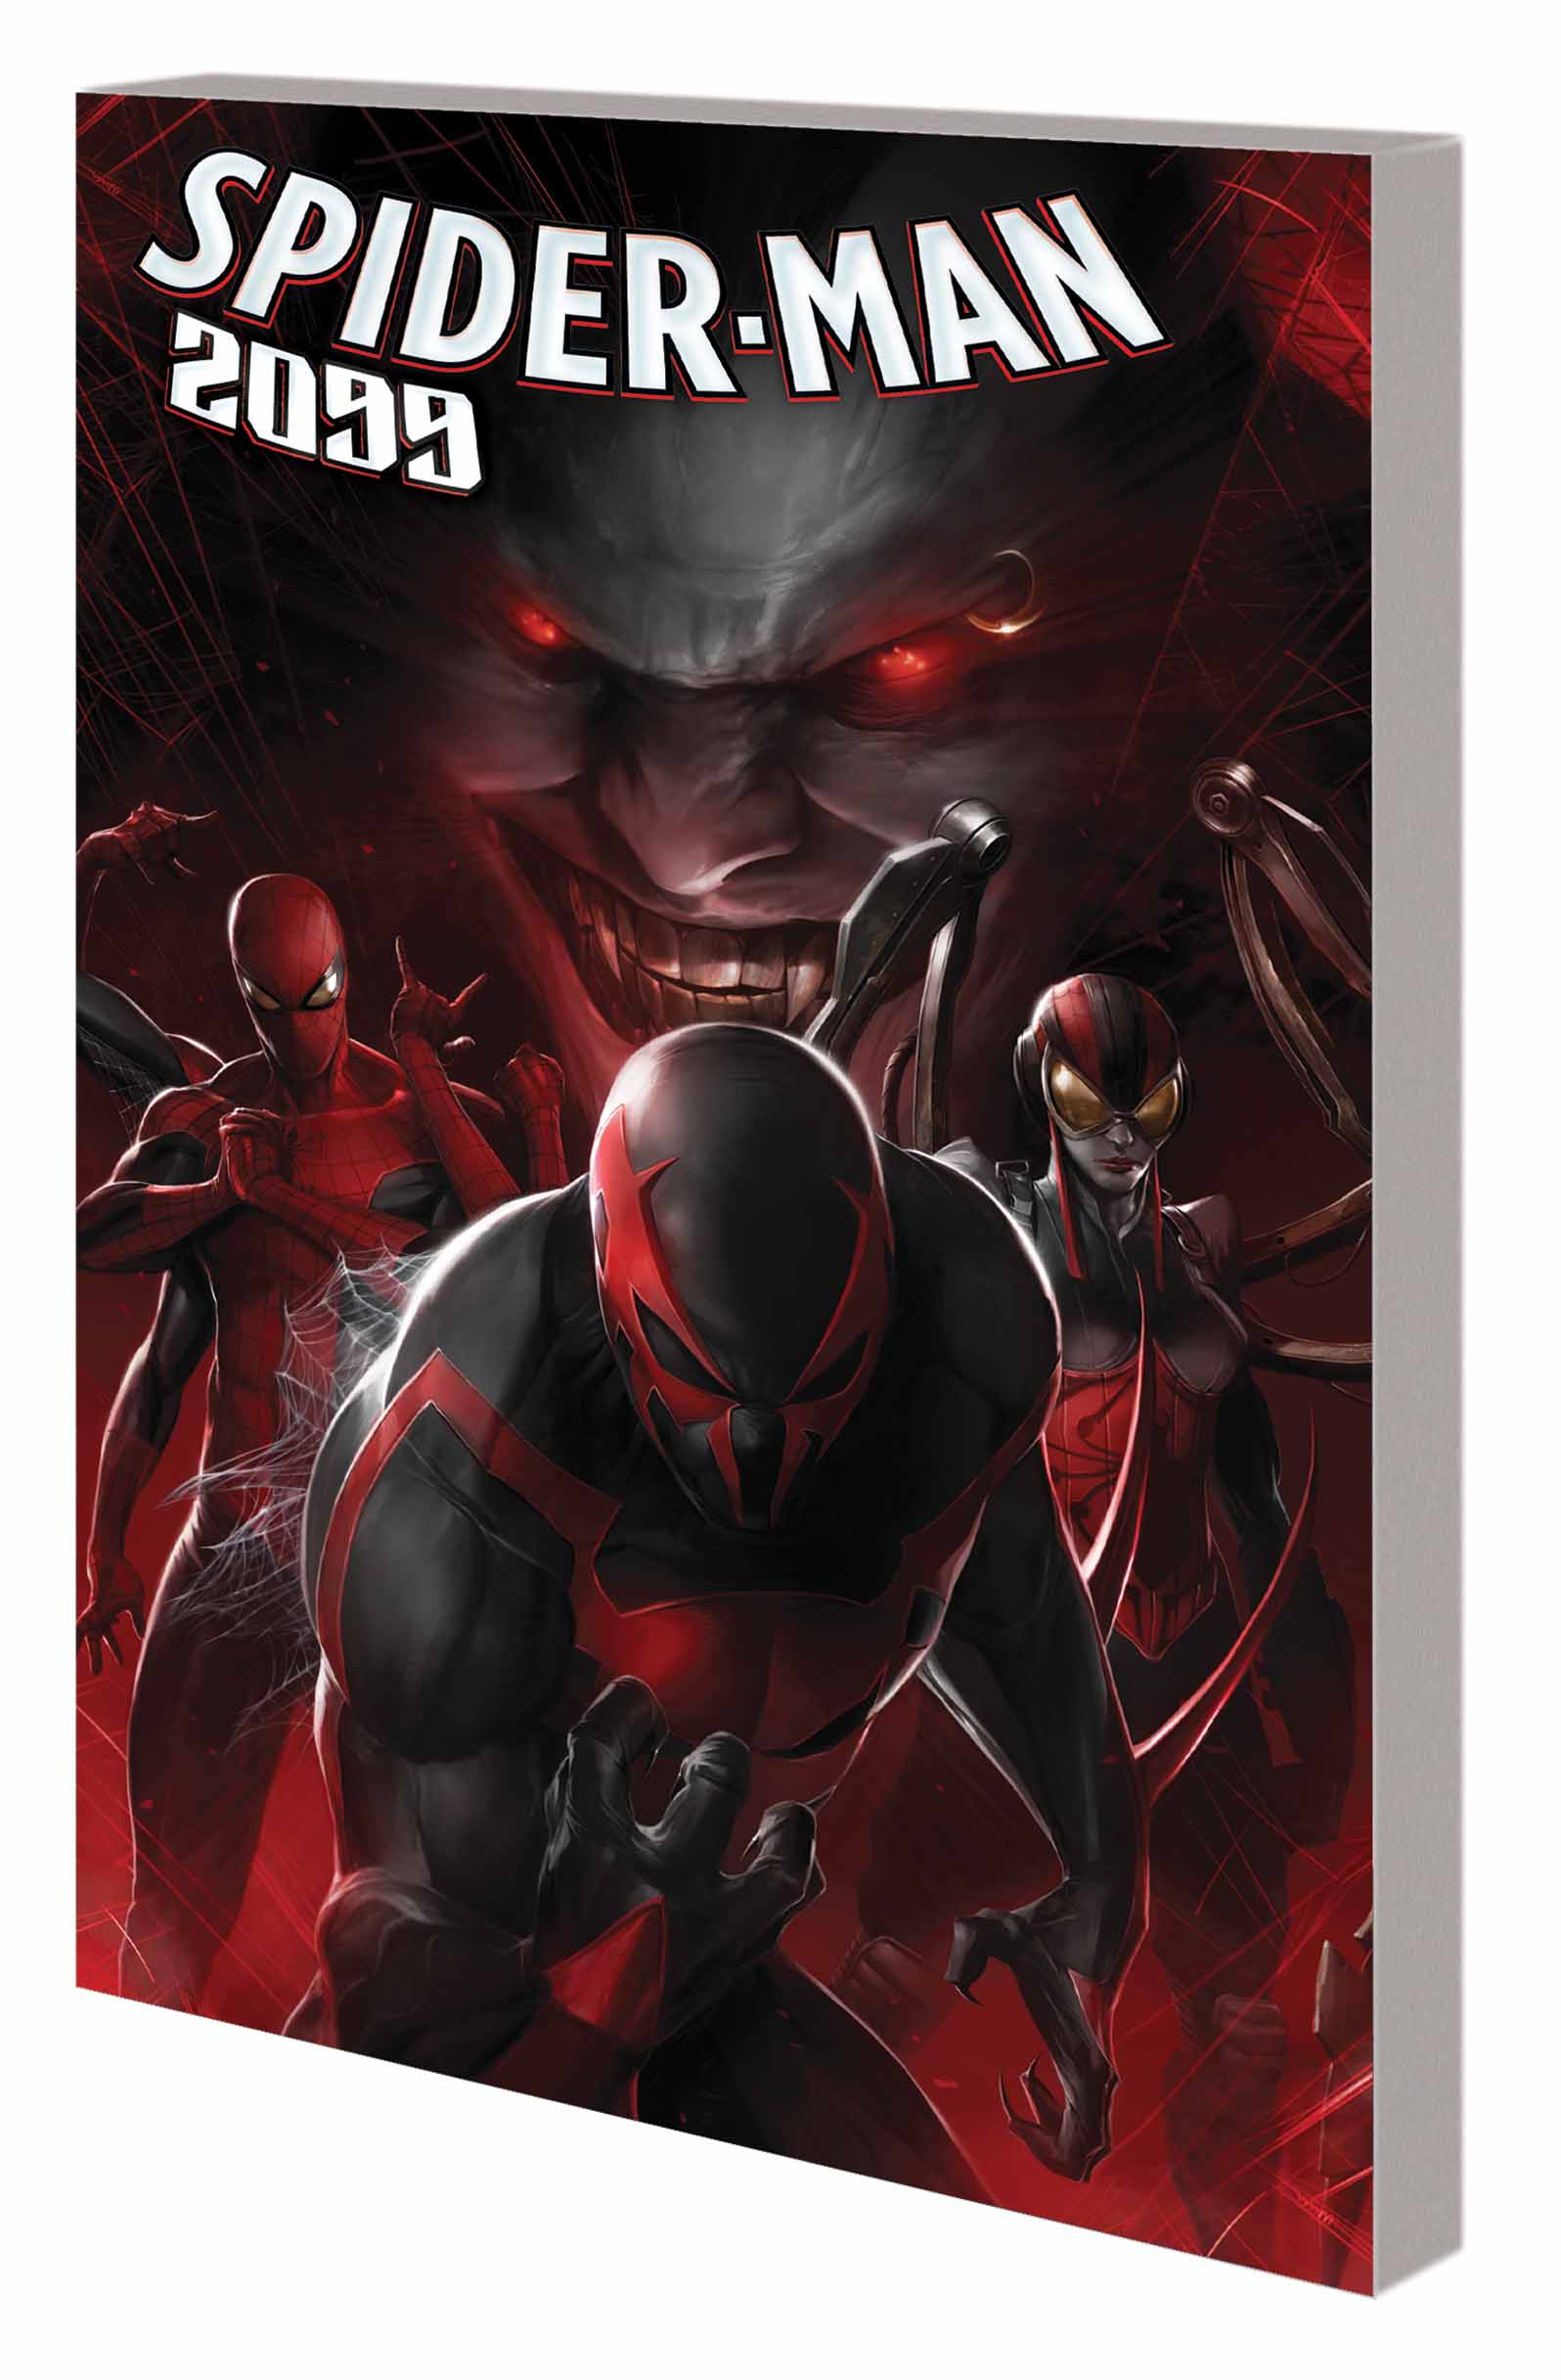 Spider-Man 2099 Vol. 2: Spider-Verse (Trade Paperback)